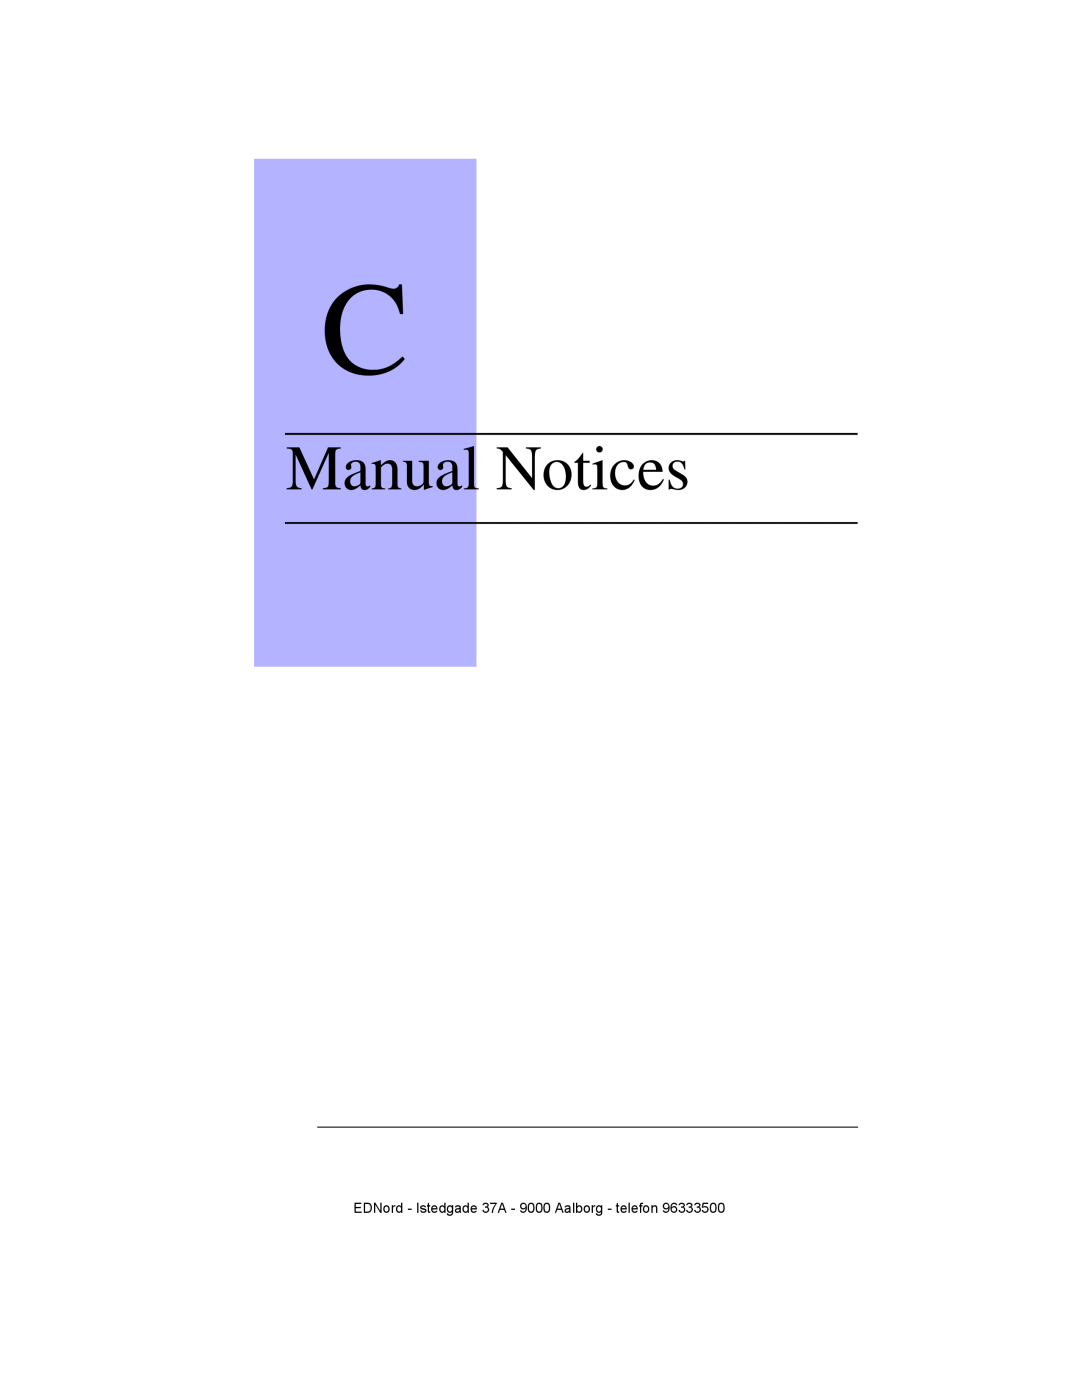 IBM QMS 4525 manual Manual Notices, EDNord - Istedgade 37A - 9000 Aalborg - telefon 